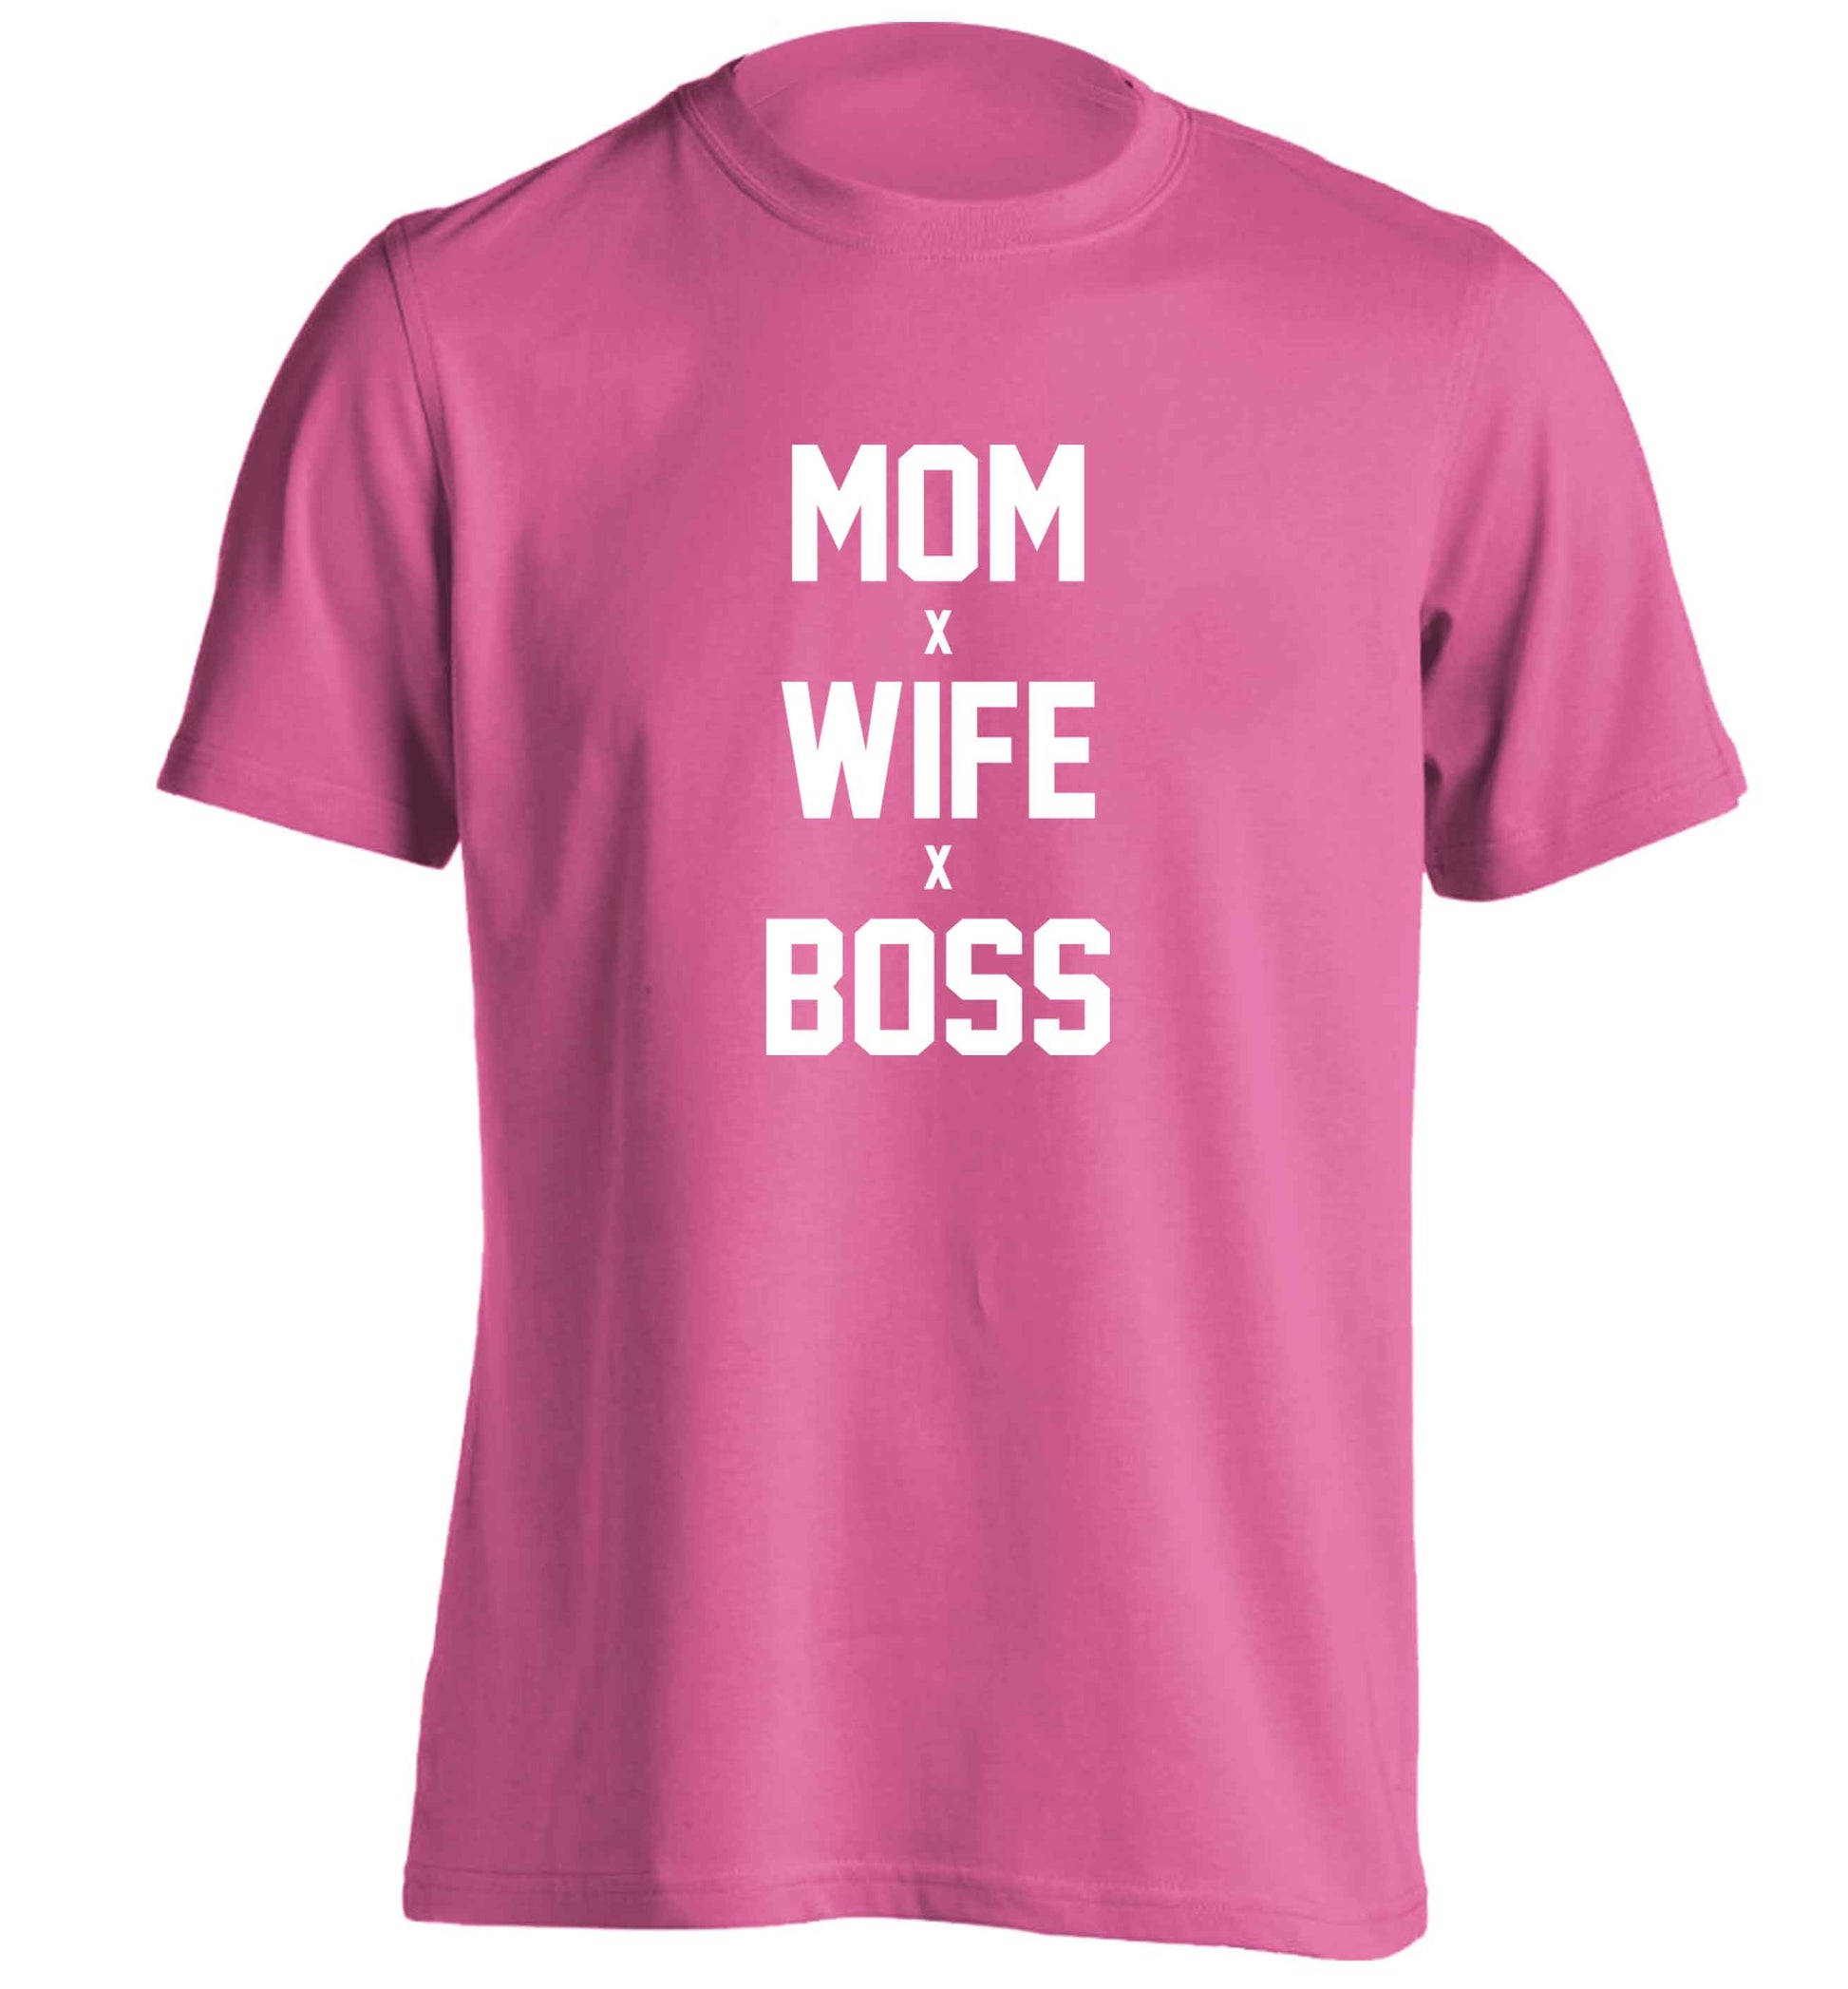 Mum wife boss adults unisex pink Tshirt 2XL